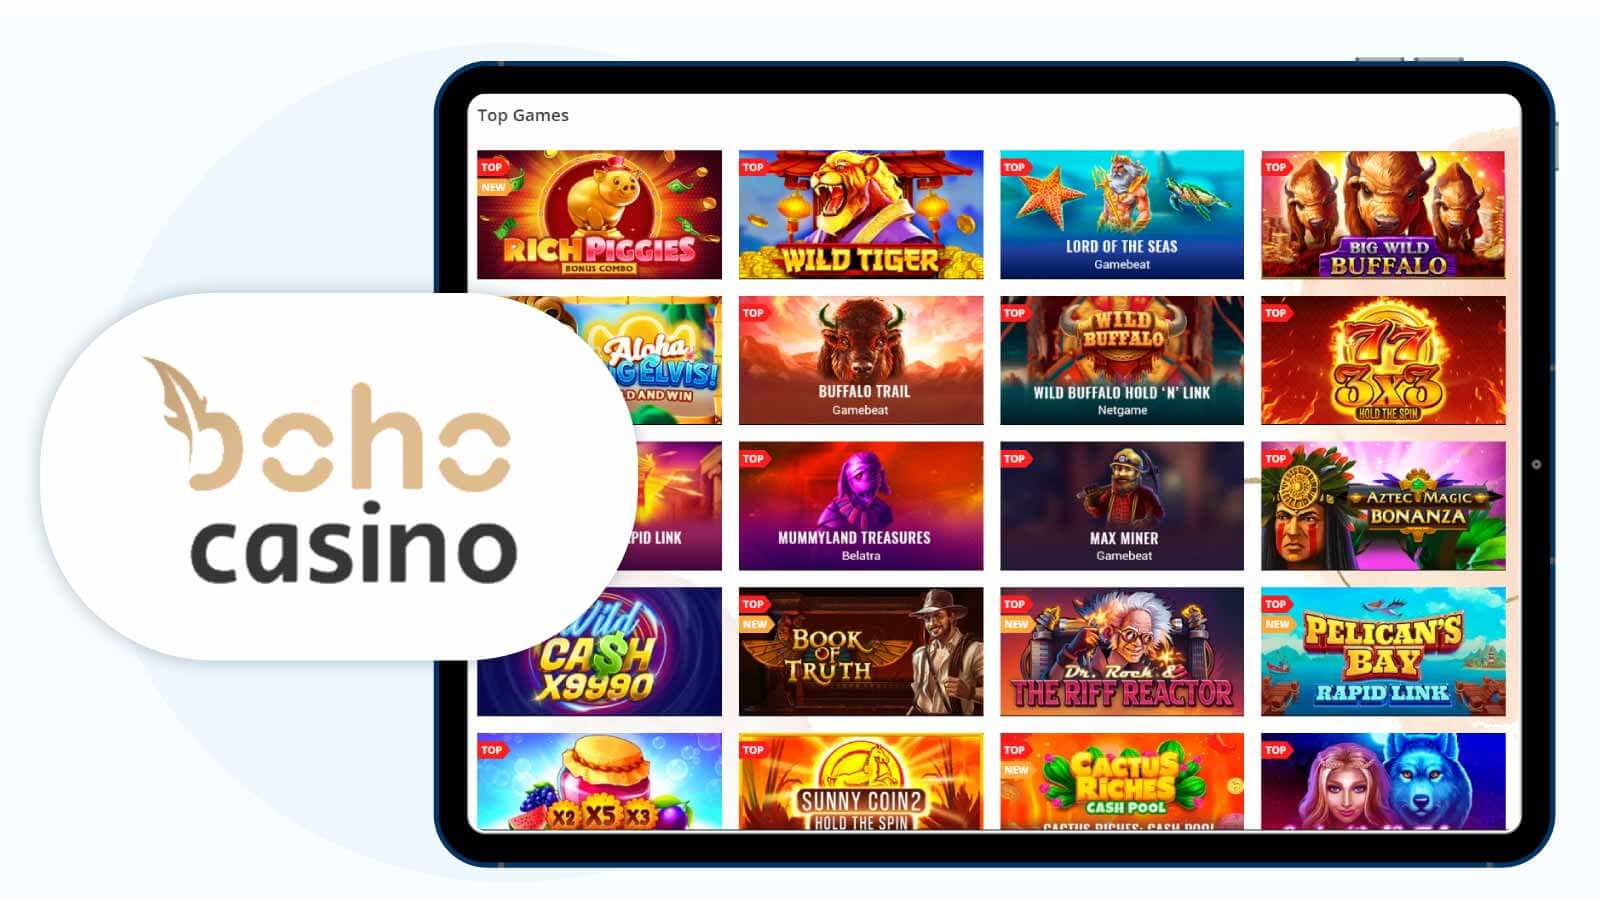 3.Boho-Casino-Best-First-Deposit-Bonus-to-Try-Aztec-Magic-Bonanza